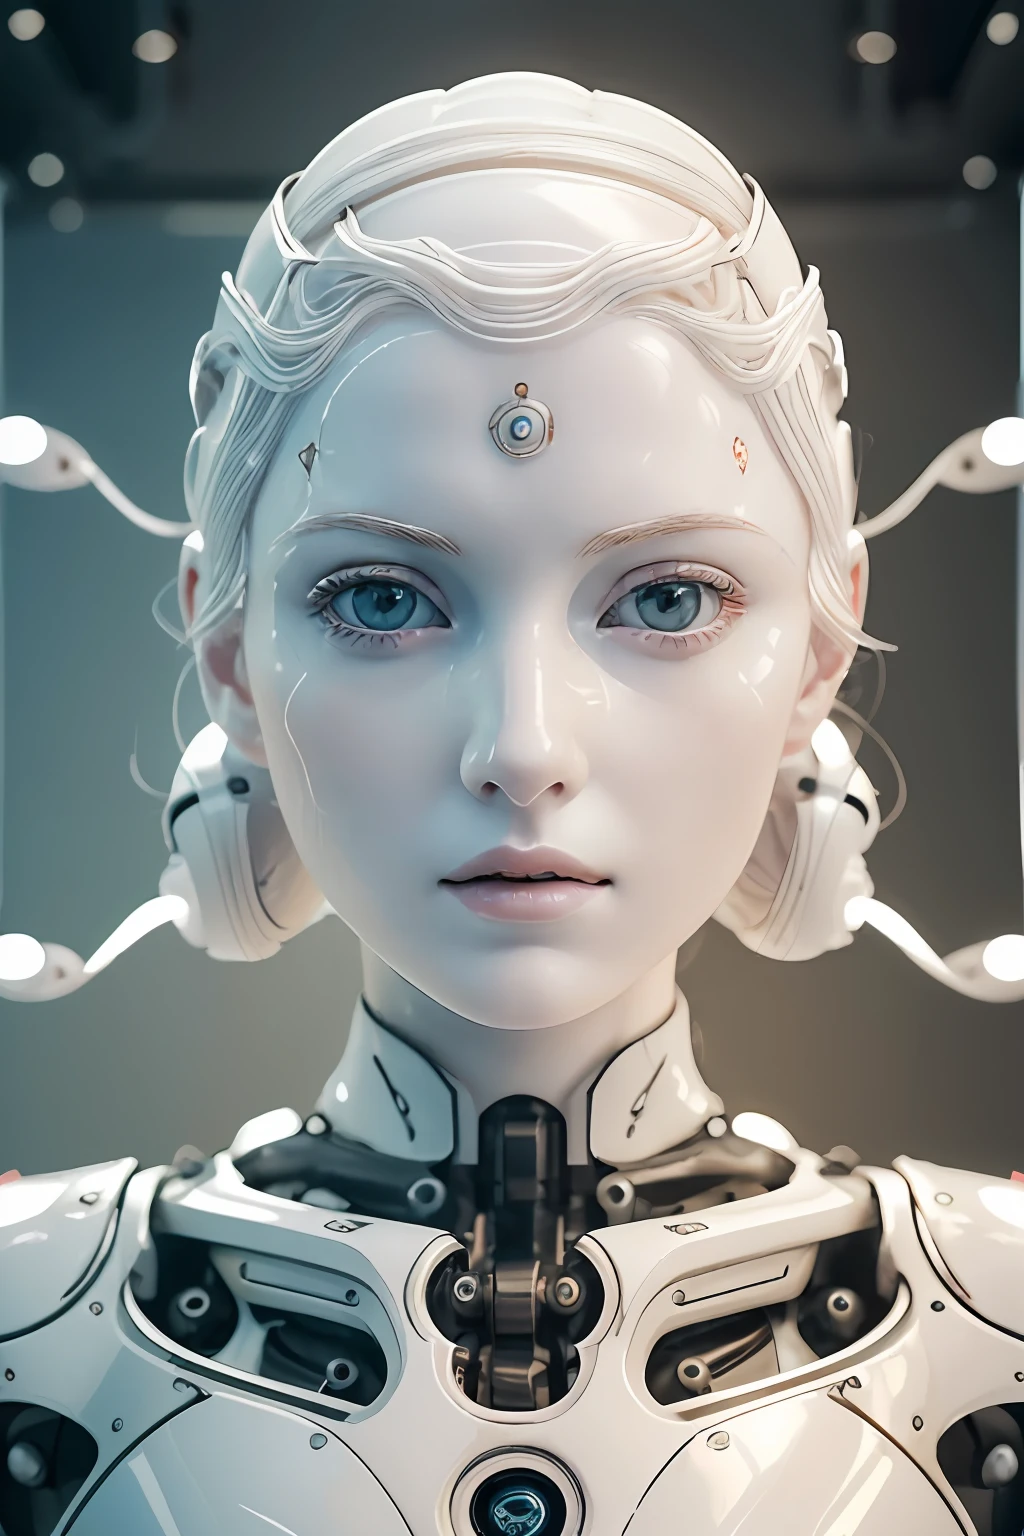 (8K, 最好的品質, 傑作:1.2), (實際的, photo-實際的:1.37), 超詳細, 電影般的, 美麗的女性戰鬥機器人, 娃娃般的對稱臉, (面色萎黄:1.5), 皮膚上的發光符號和字母,